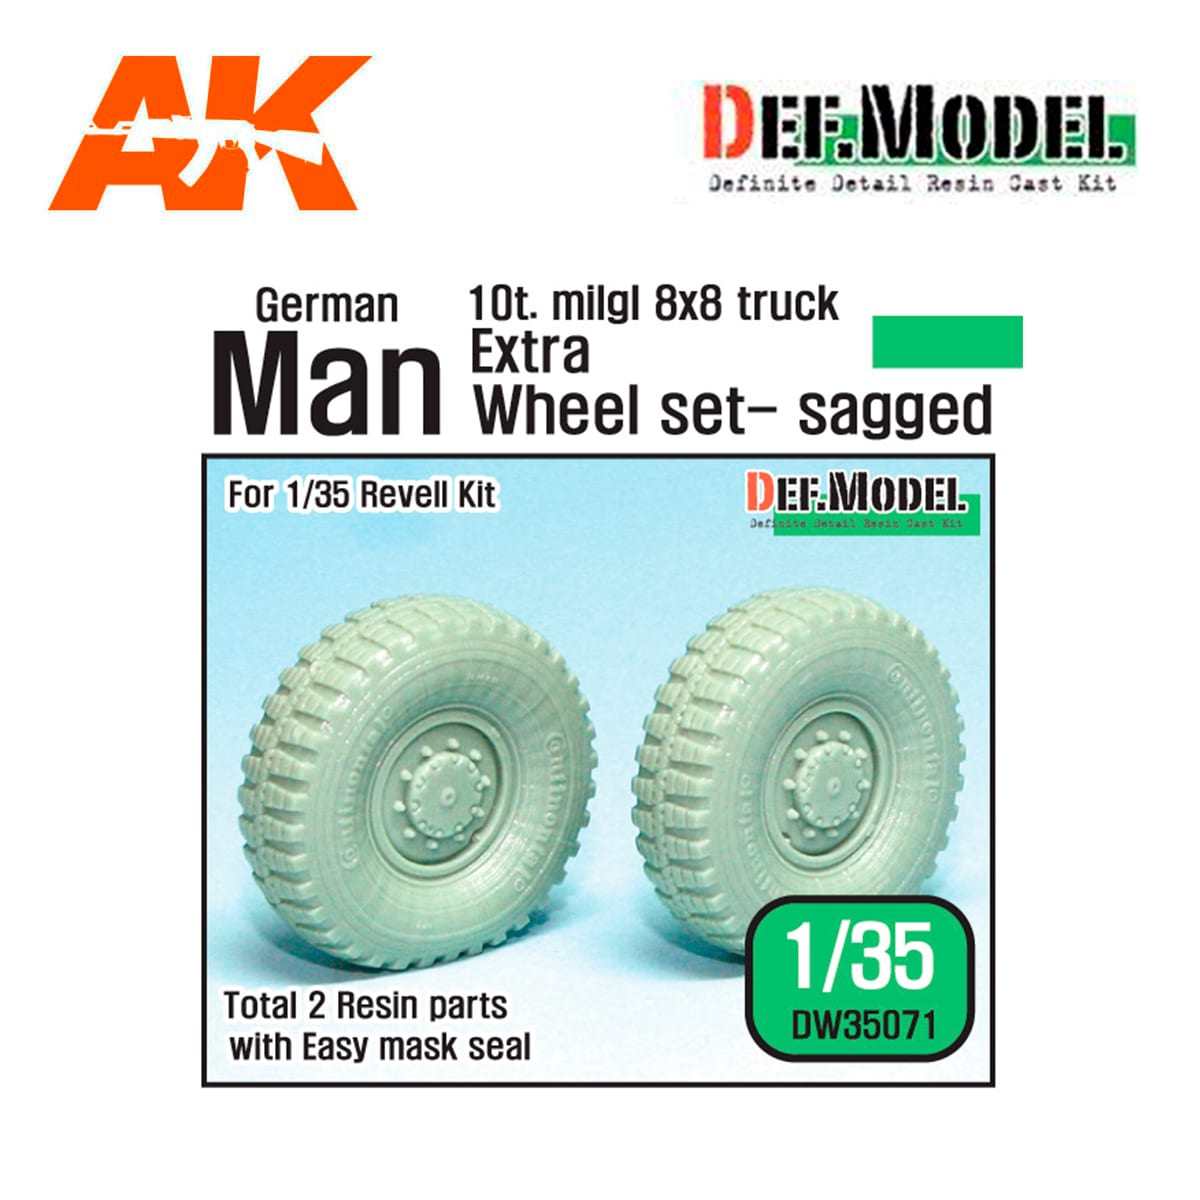 German Man milgl Truck Extra 2ea Sagged Wheel set (for Revell Man 10t 1/35)